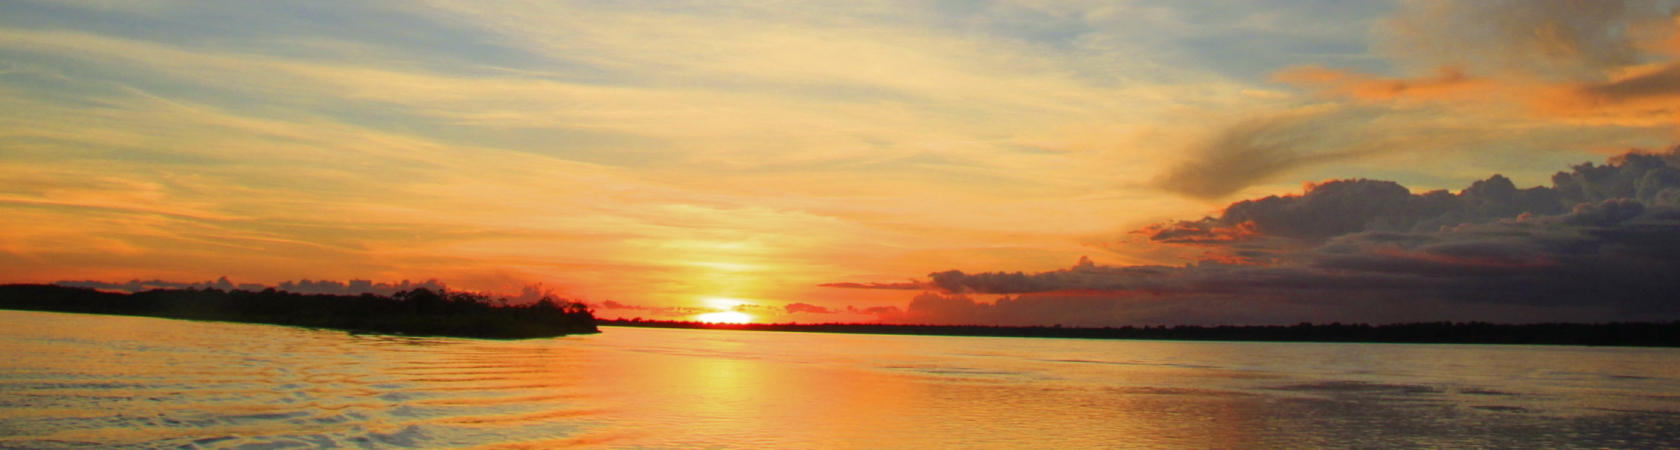 Amazonas Brasilien Sonnenuntergang auf dem Amazonas